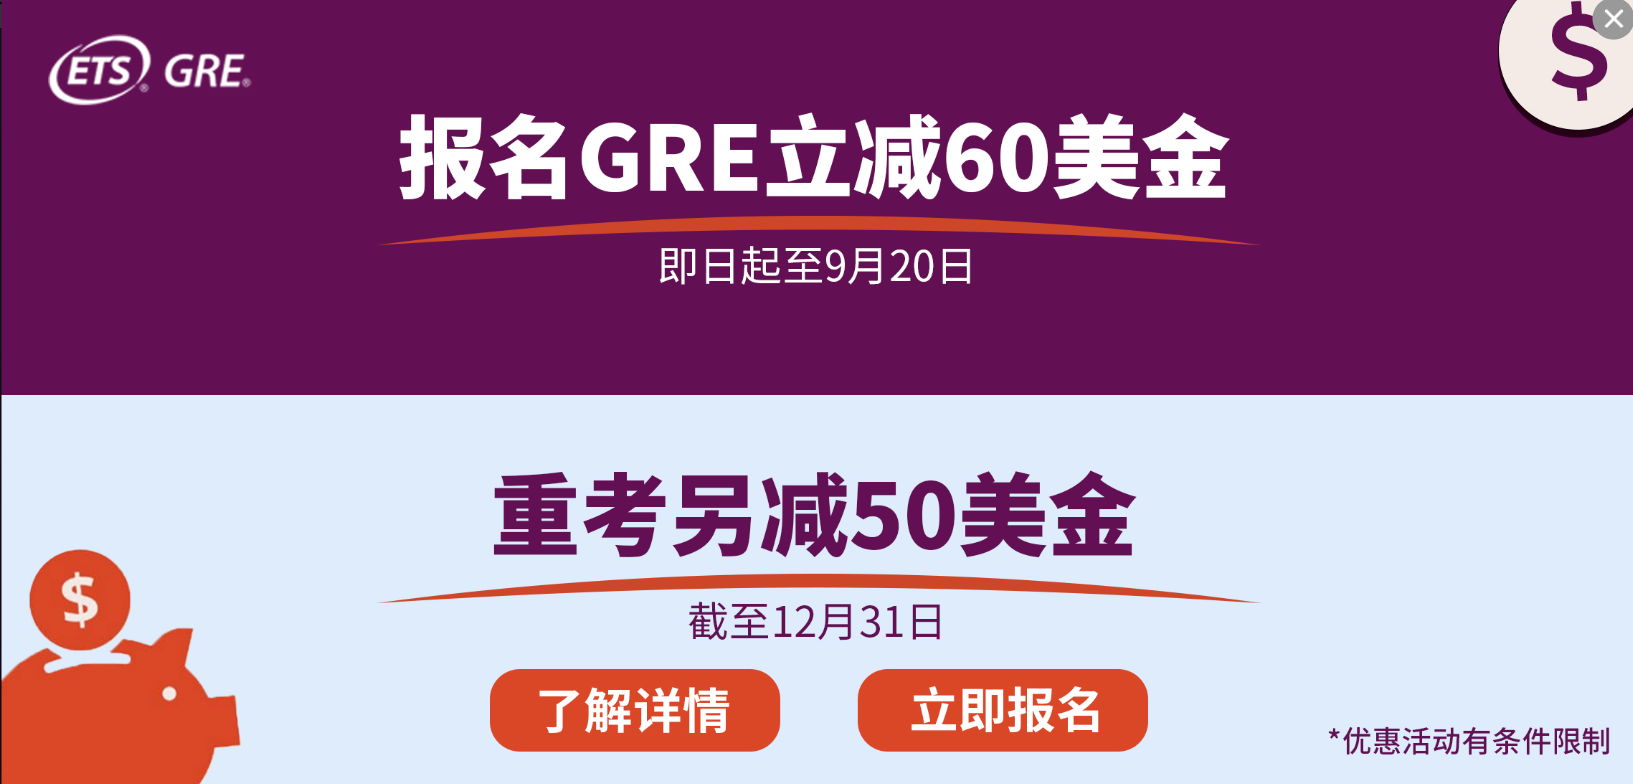 gre-discount